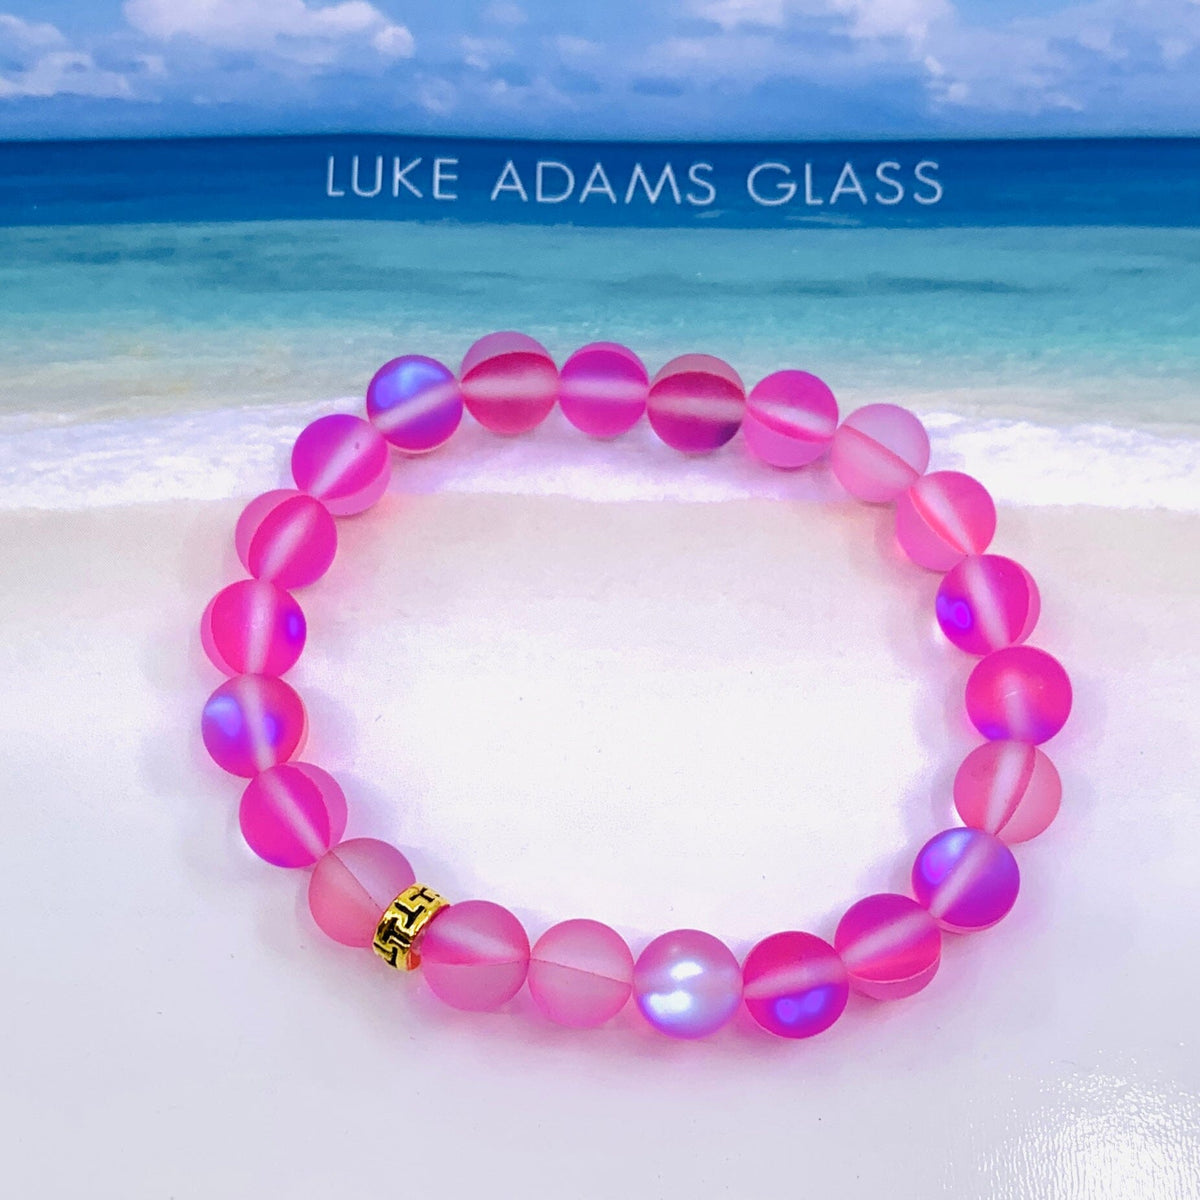 Mermaid Glass Bead Bracelets Jewelry - Pink 